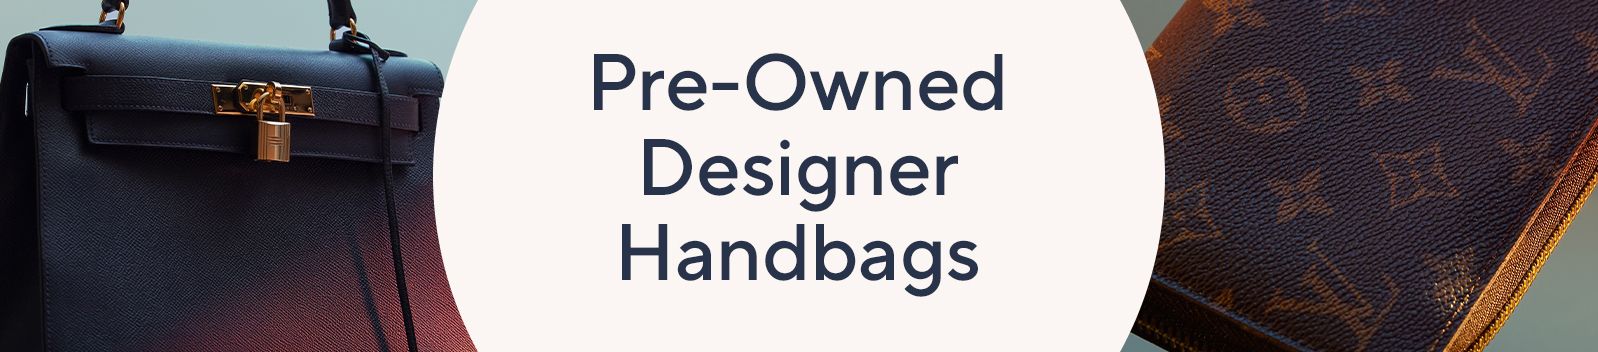 Pre-Owned Designer Handbags